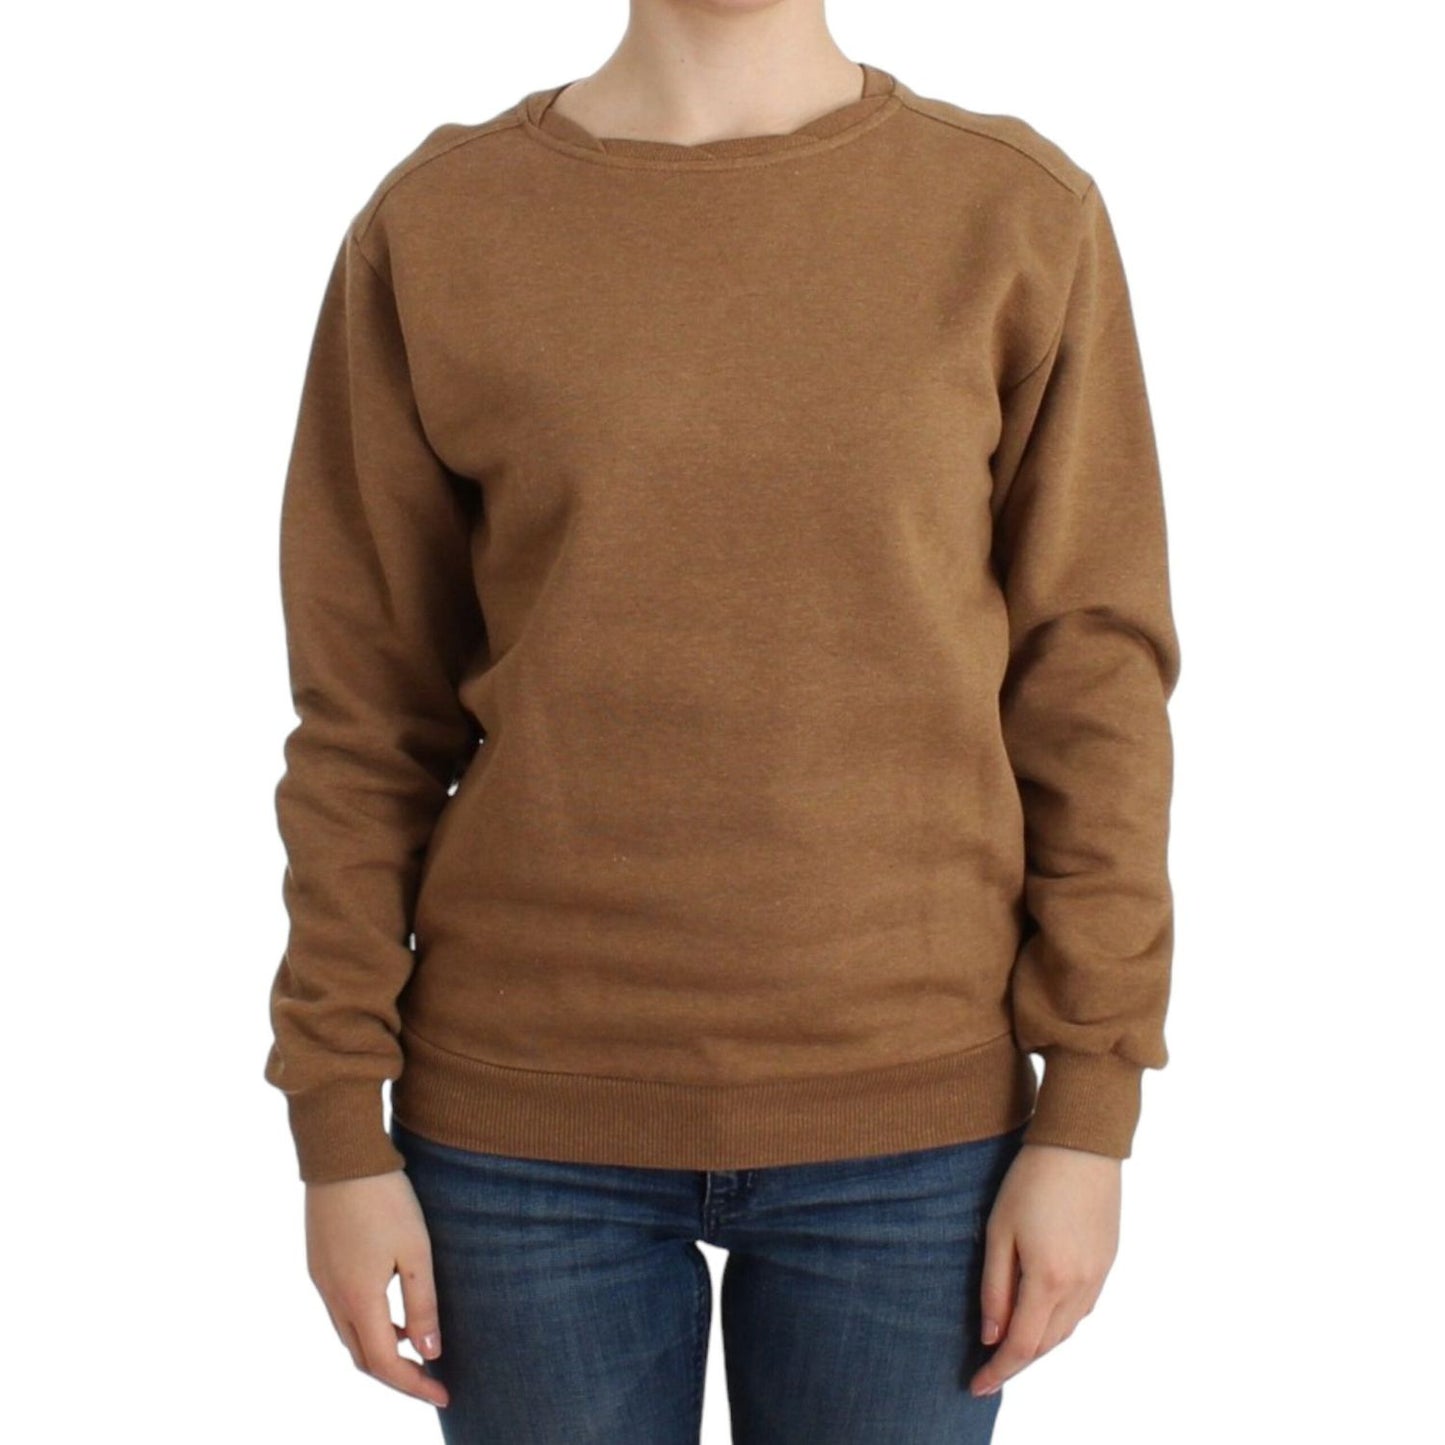 John Galliano Chic Brown Crewneck Cotton Sweater brown-crewneck-cotton-sweater 5844-brown-crewneck-cotton-sweater-scaled-2c3af097-c3c.jpg